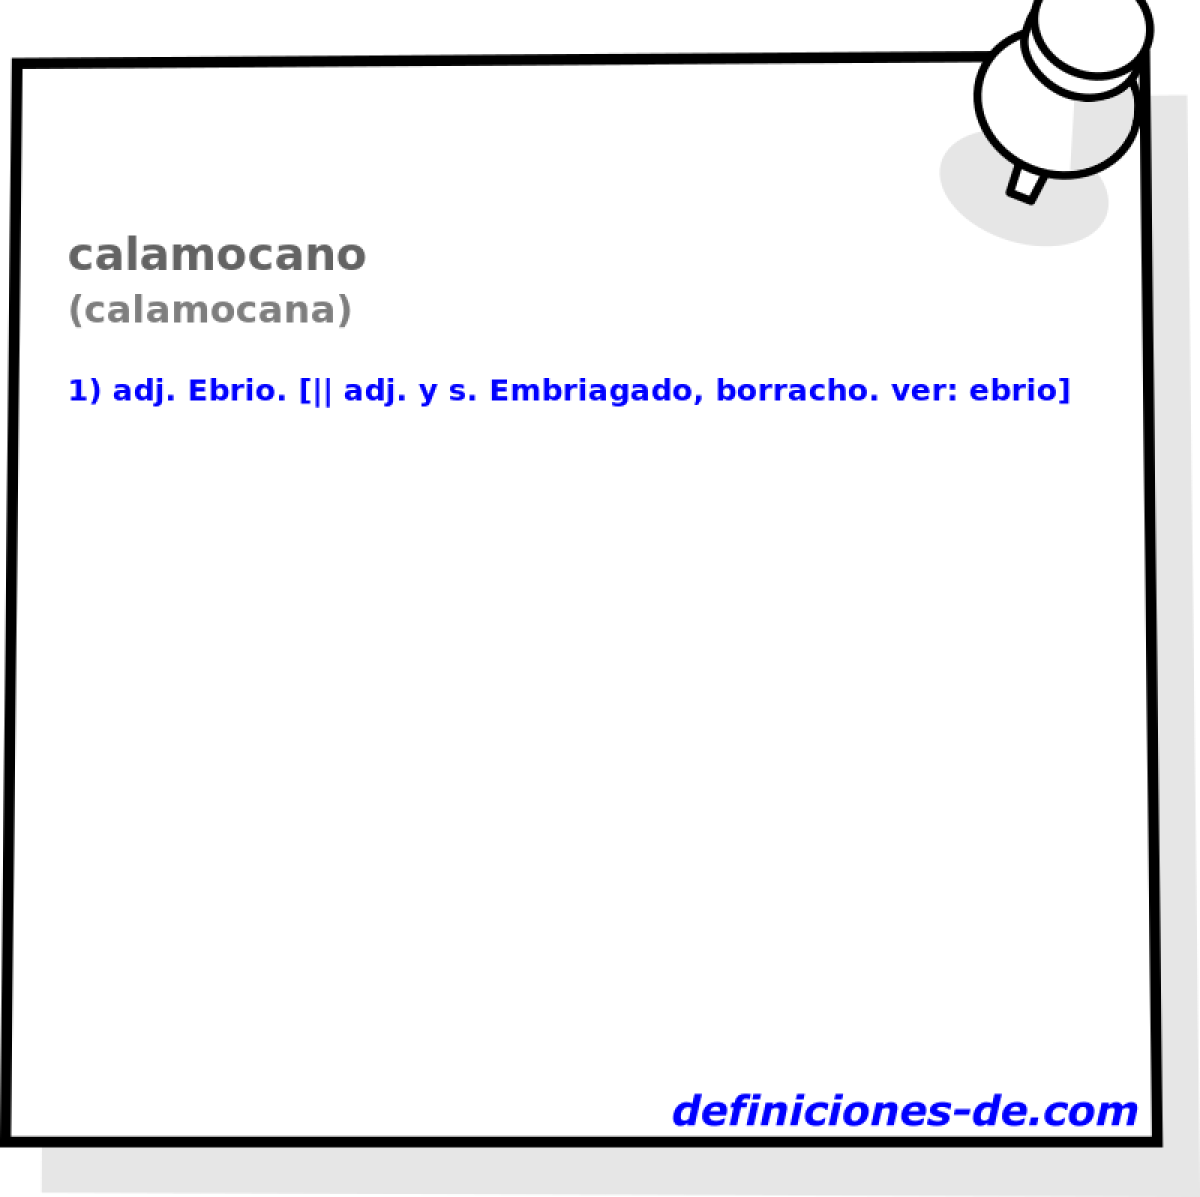 calamocano (calamocana)